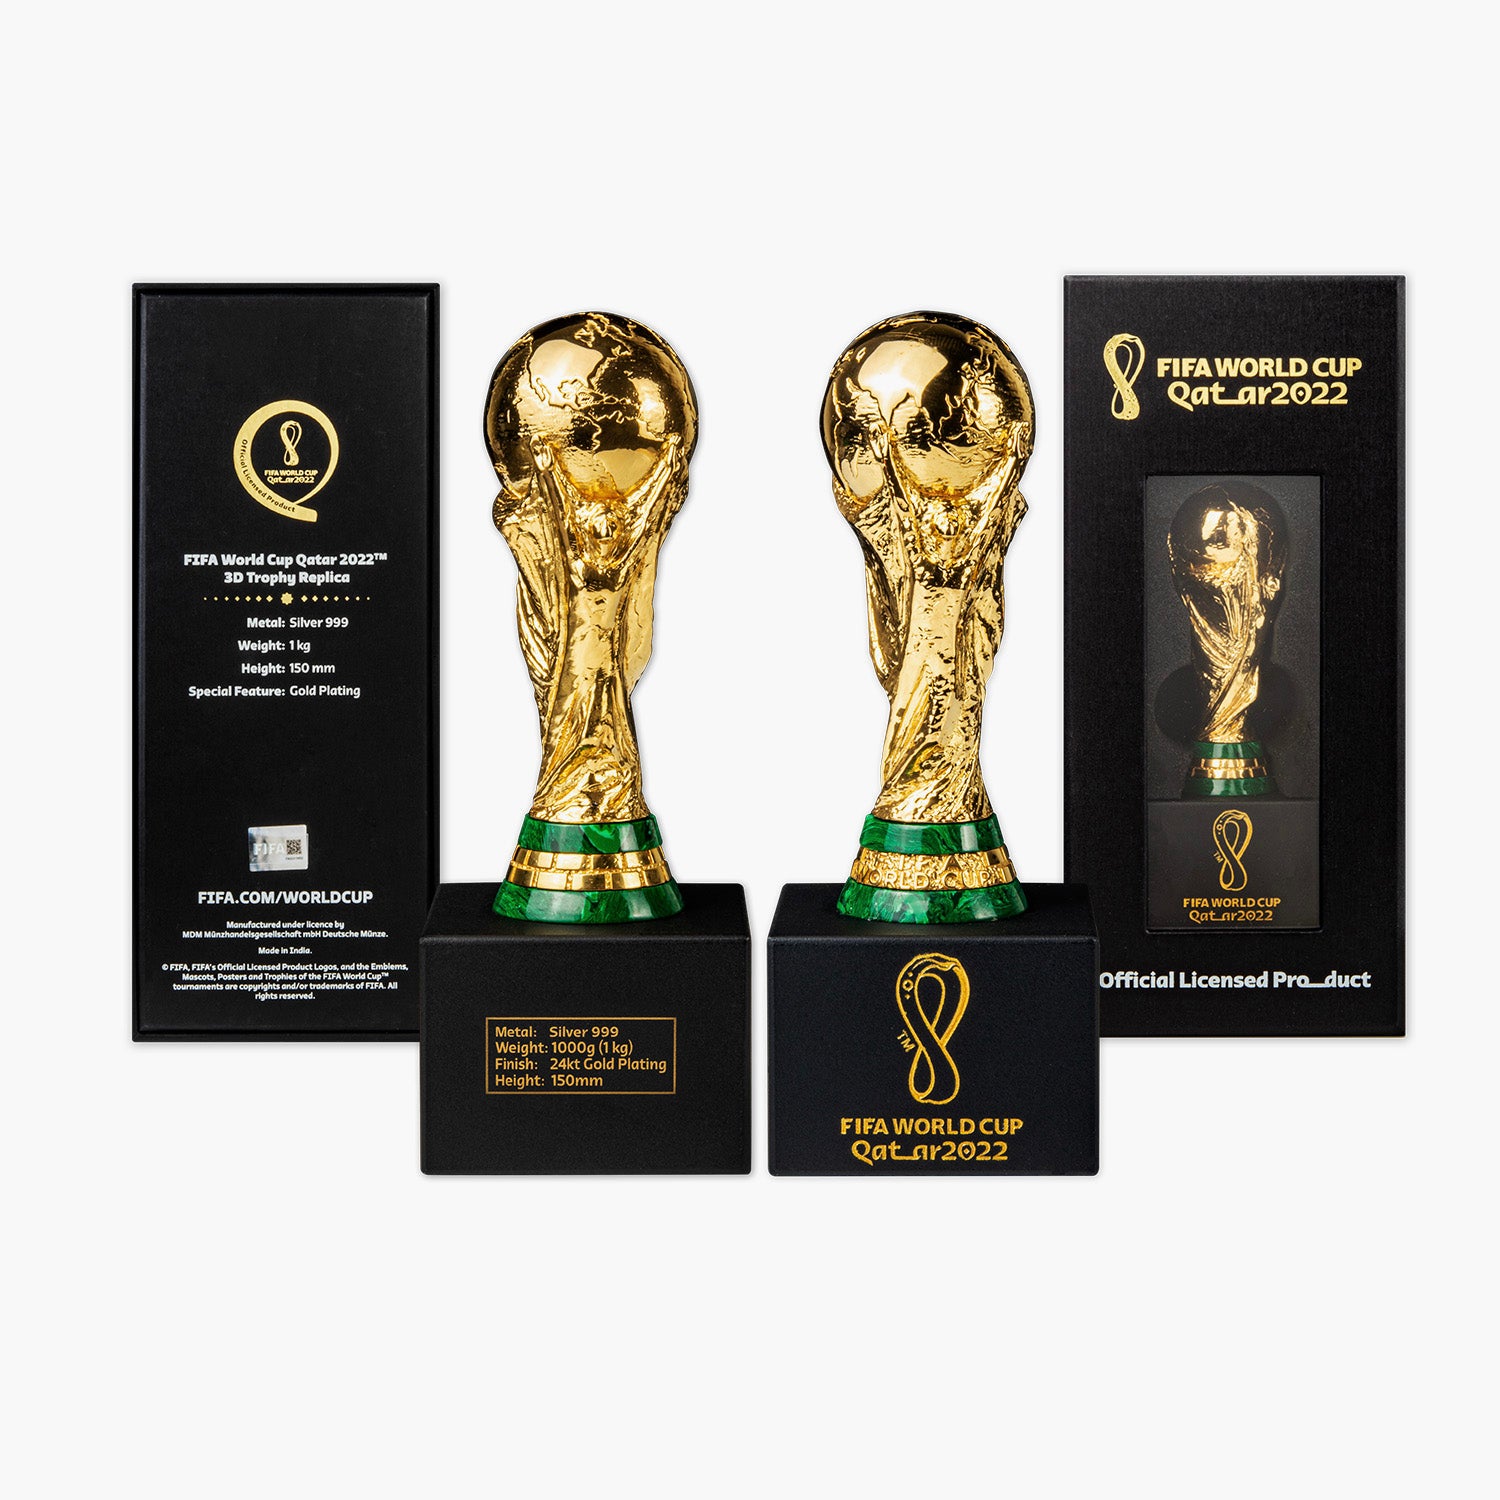 Official 2018 FIFA World Cup Mini Replica Trophy